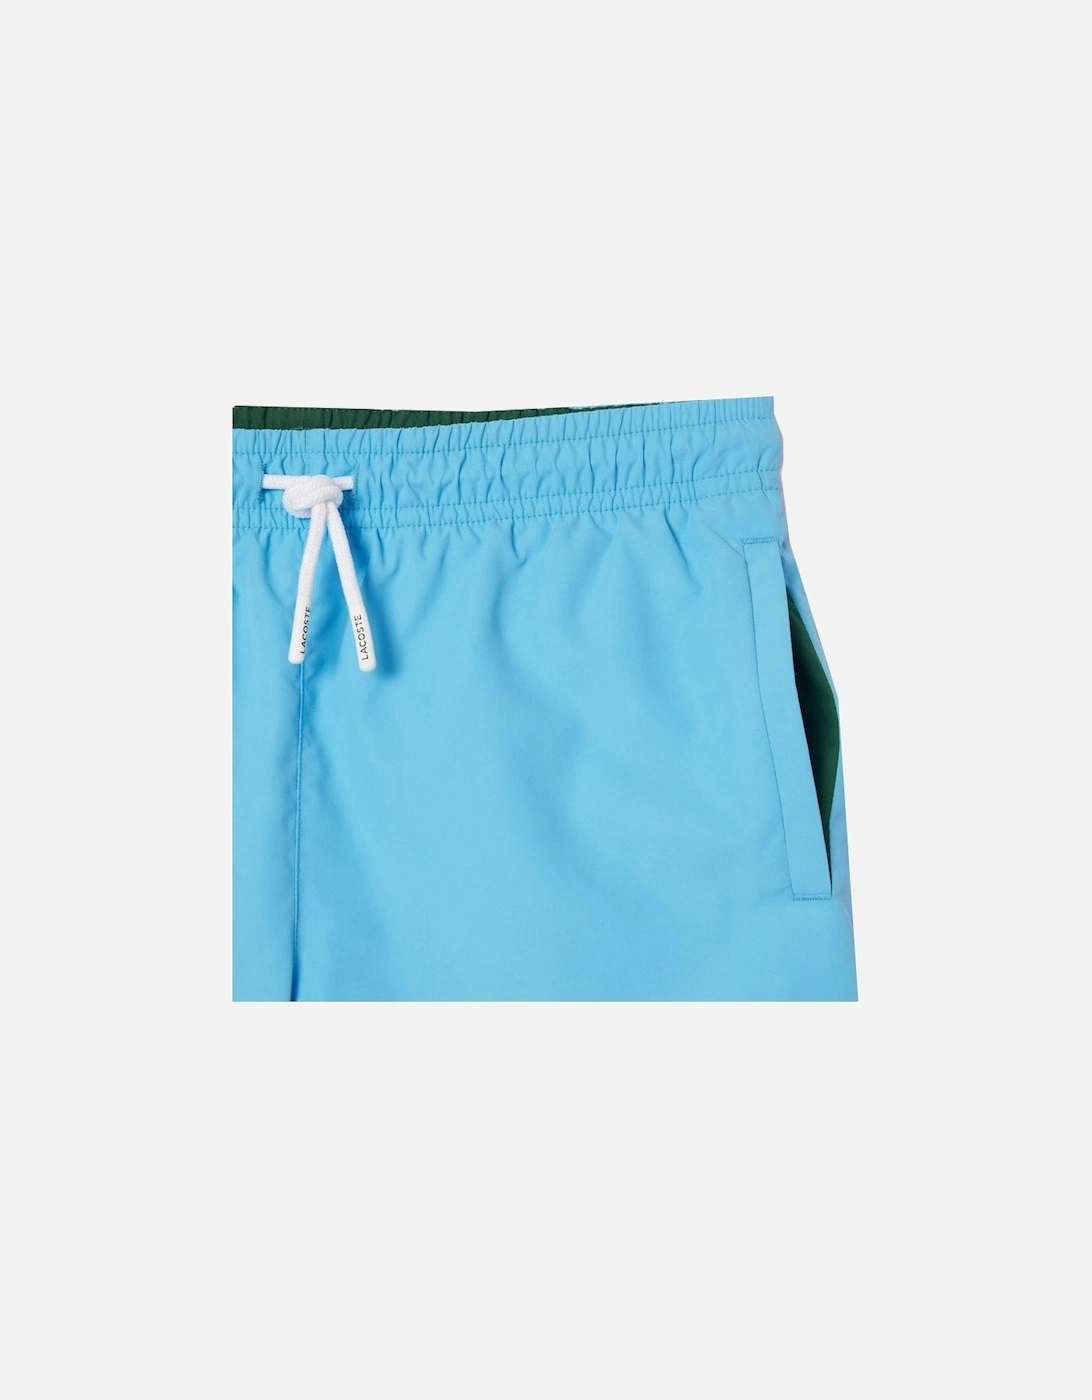 Boy's Blue Swim Shorts